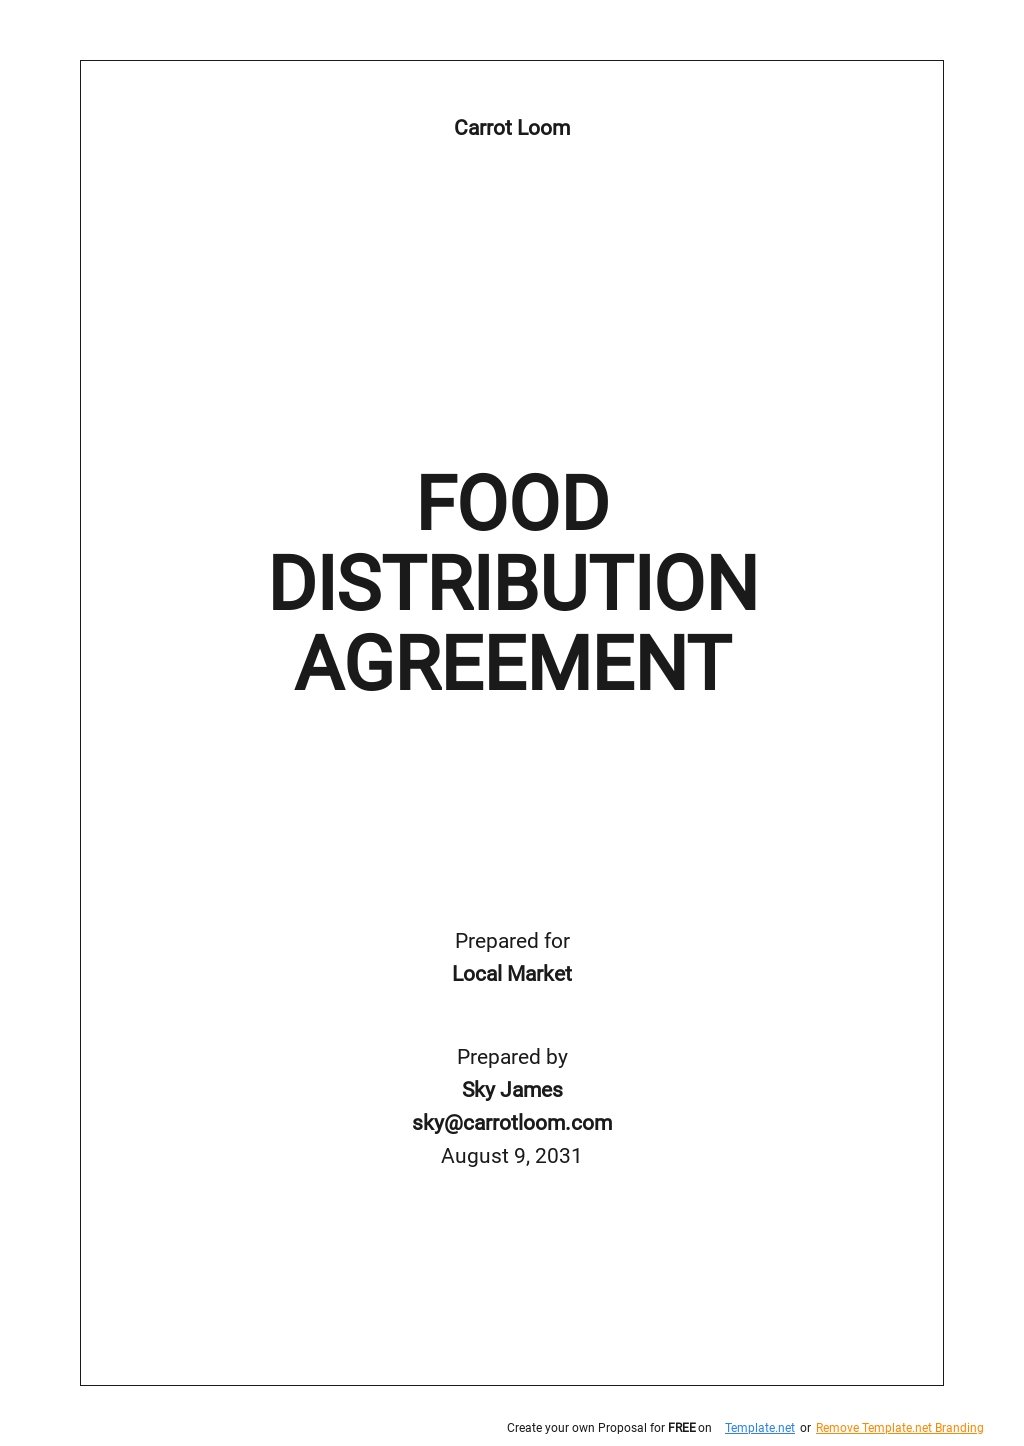 Food Distribution Agreement Template.jpe